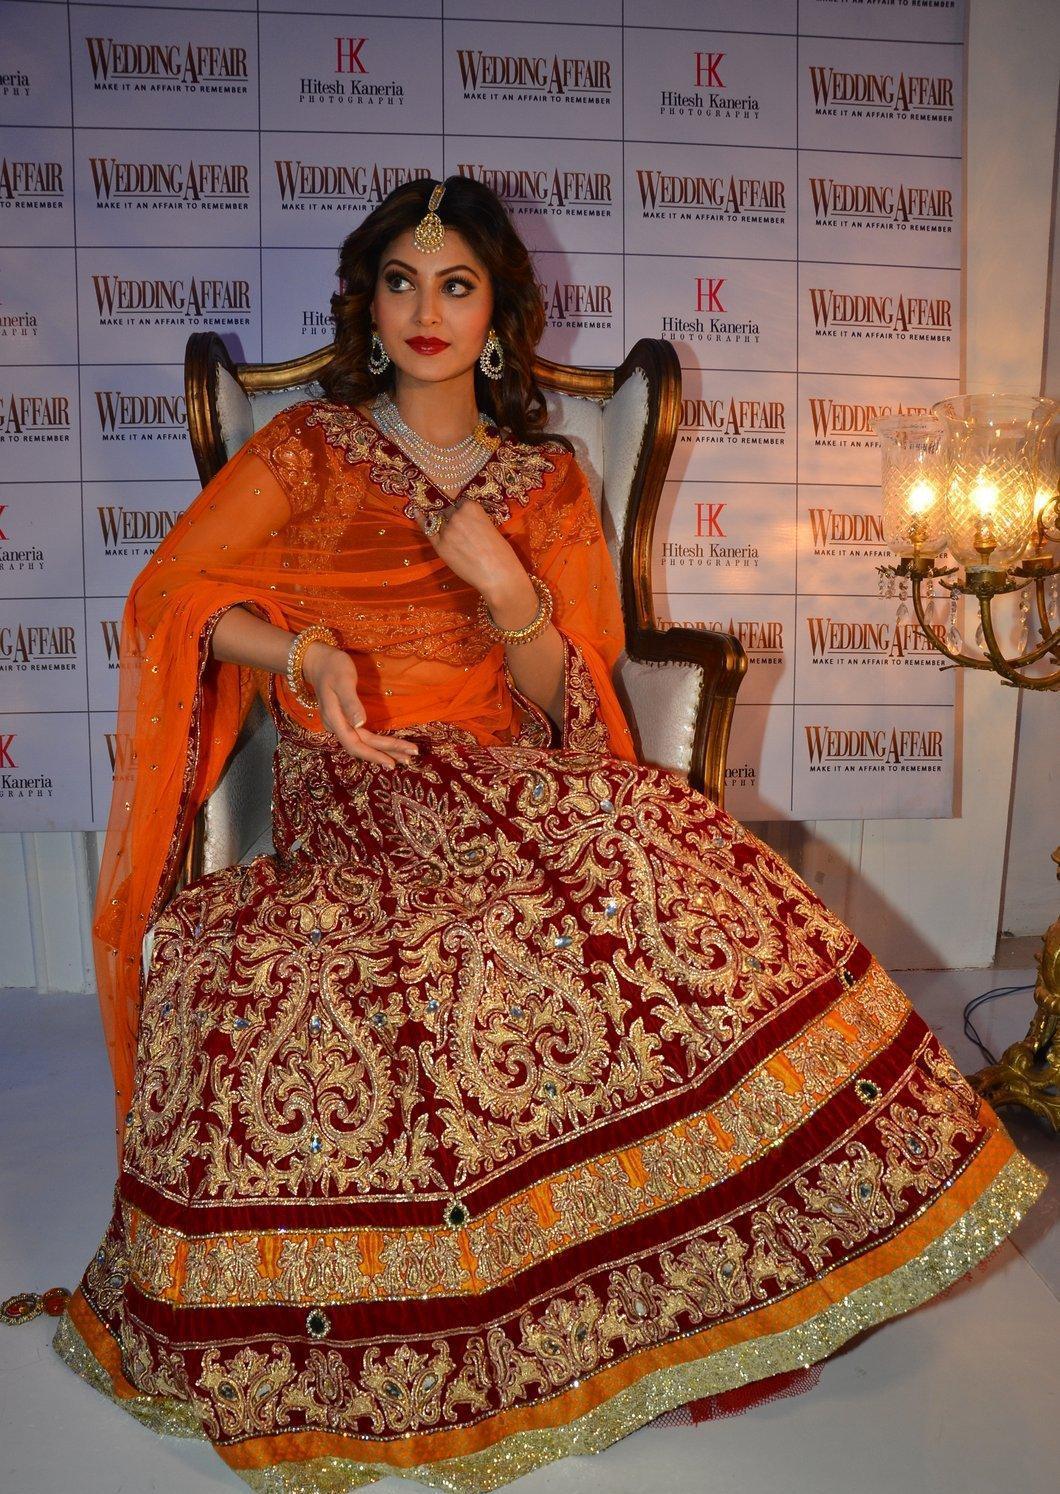 Urvashi Rautela Looks Gorgeous In Bridal Dress At Photoshoot For The â€œWedding Affairâ€ Magazine